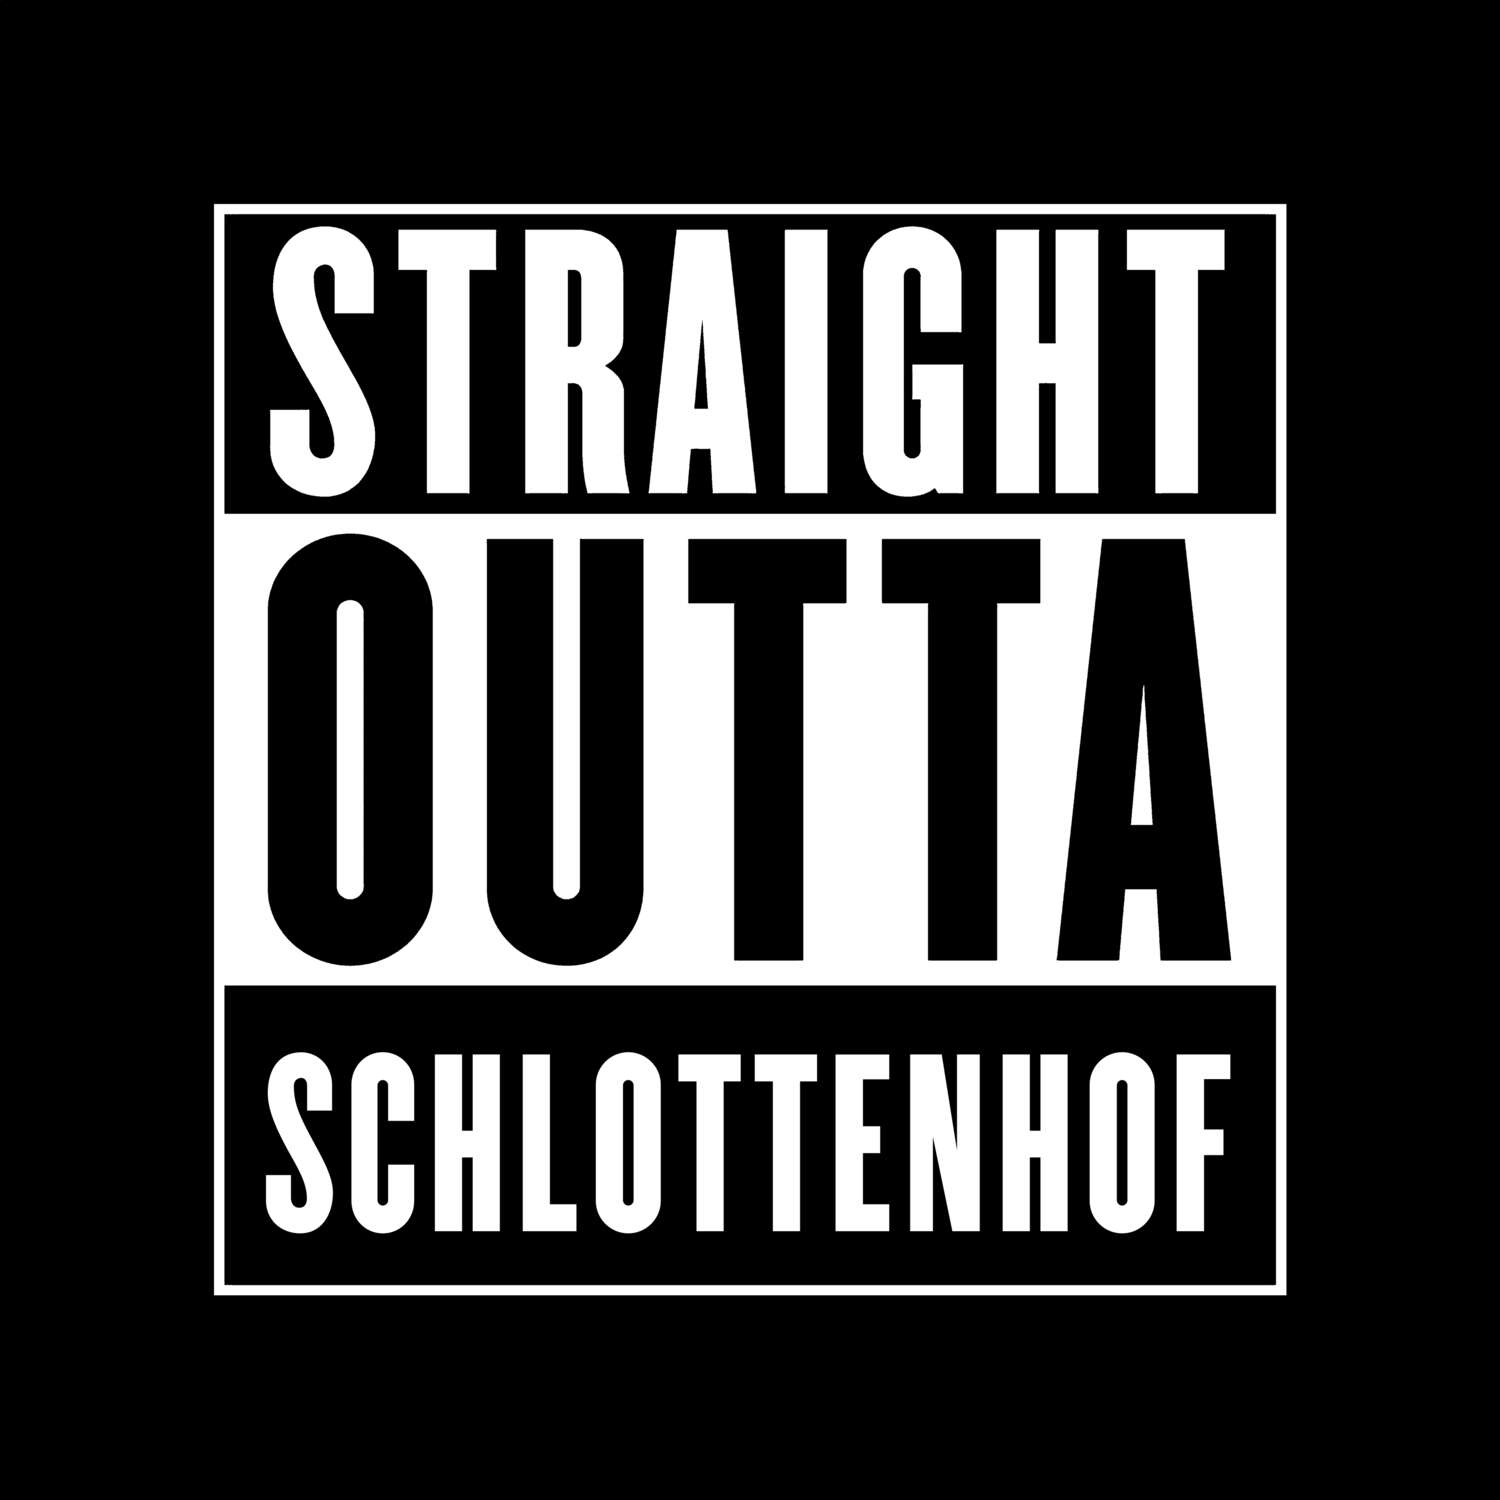 Schlottenhof T-Shirt »Straight Outta«